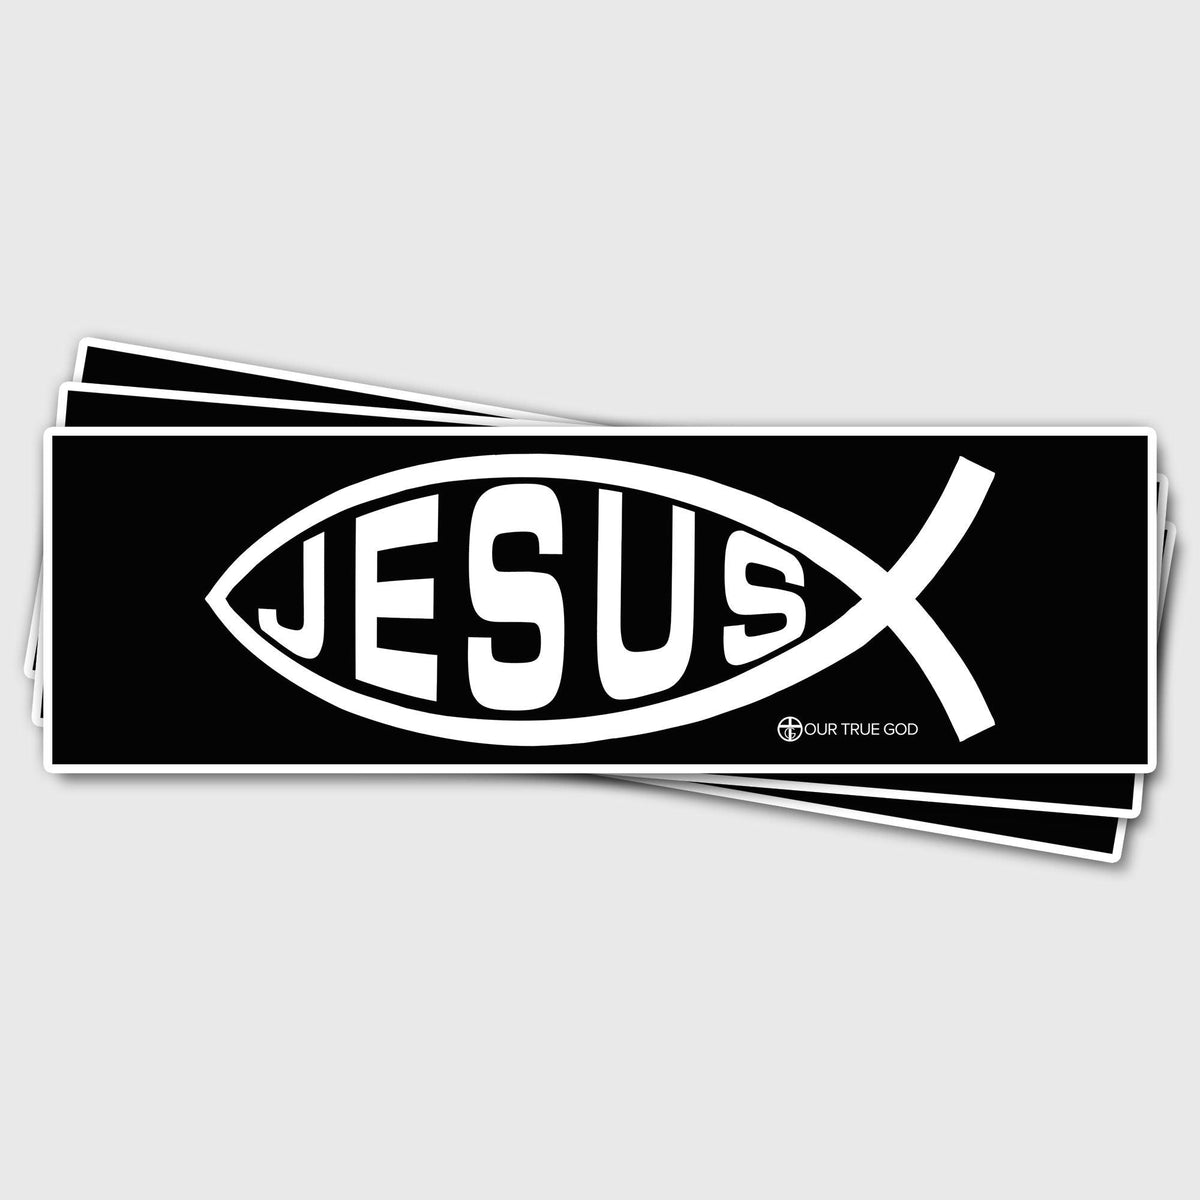 Jesus Fish Bumper Stickers - Our True God